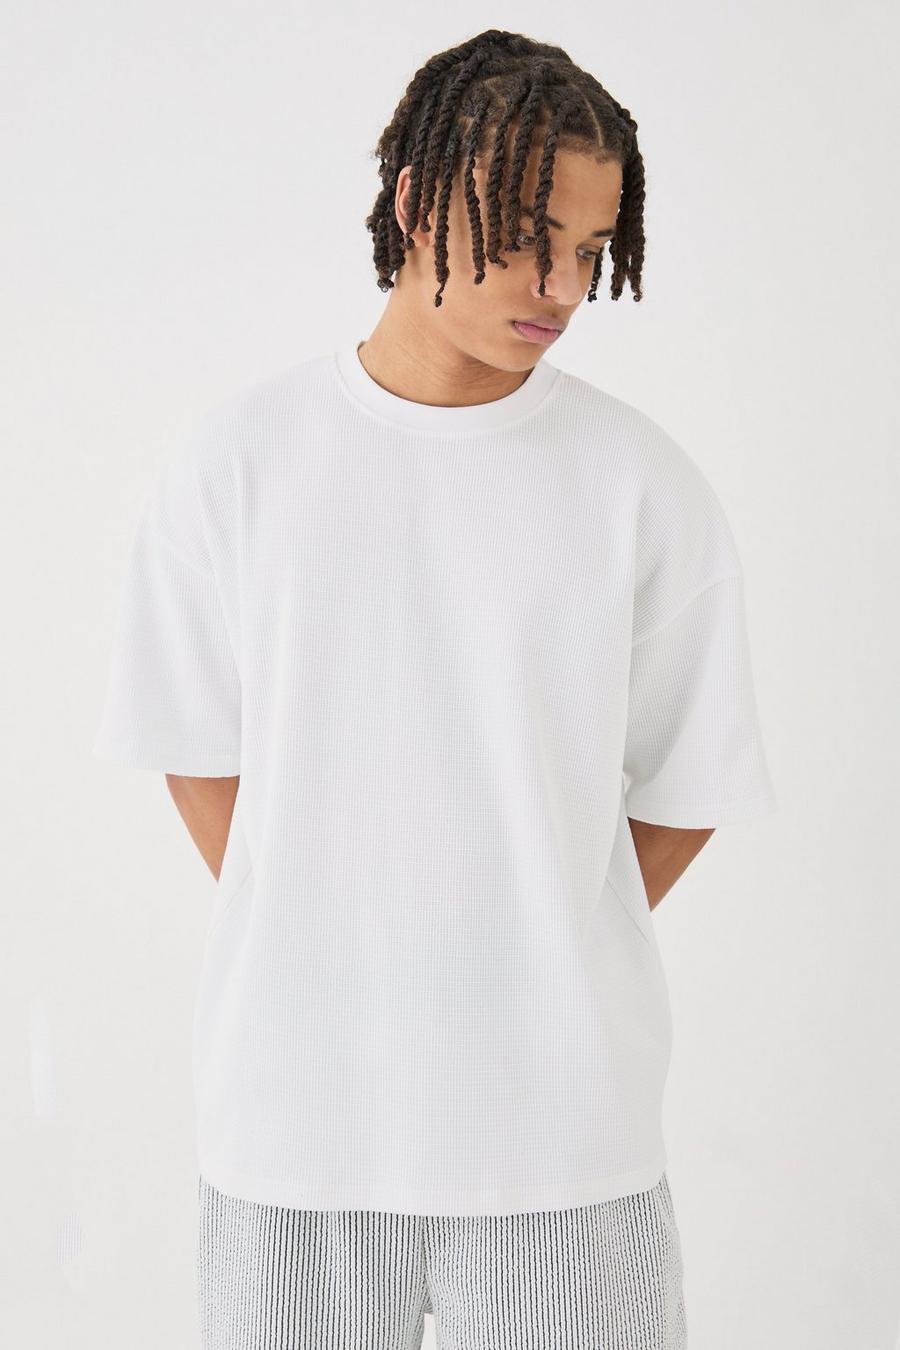 Camiseta oversize de tela gofre, White